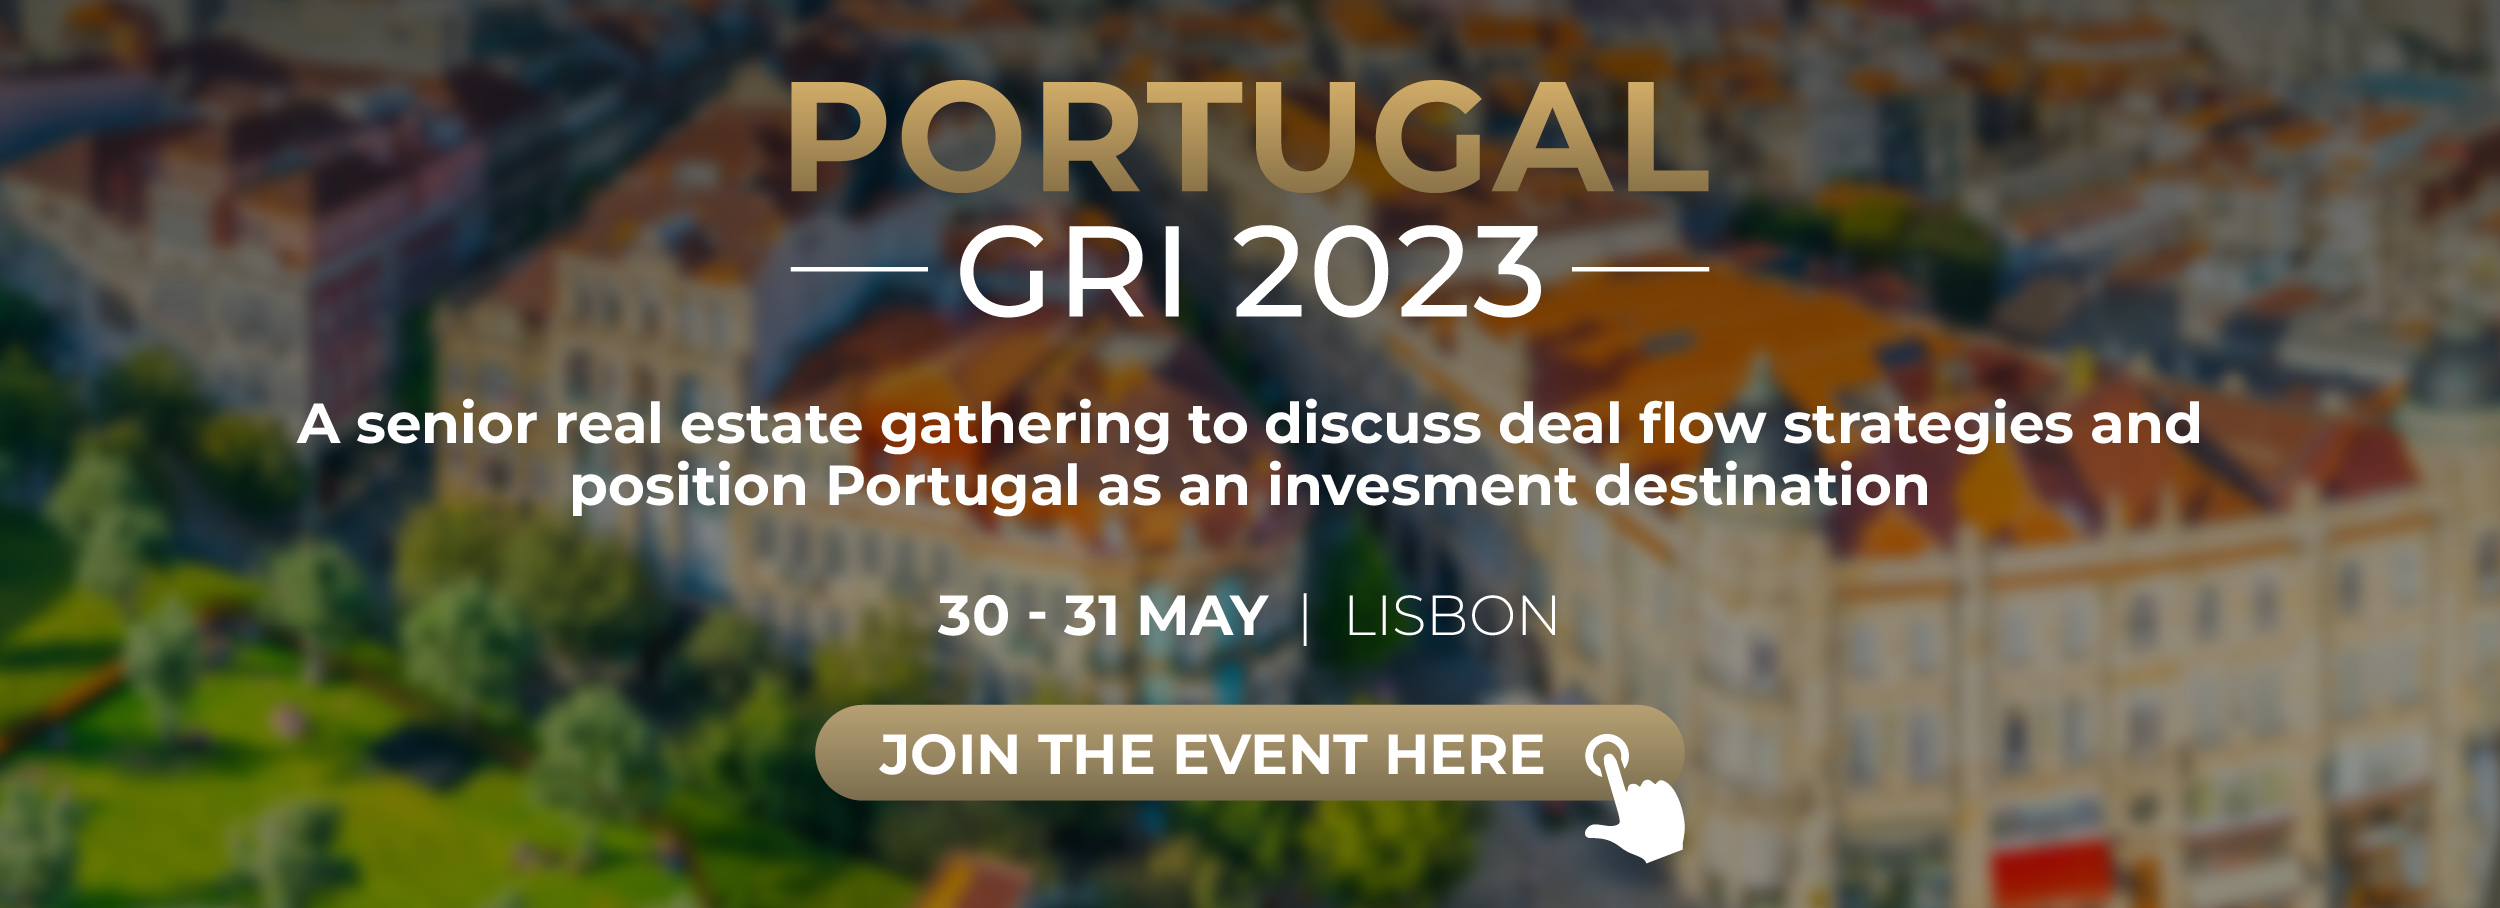 Portugal GRI 2023